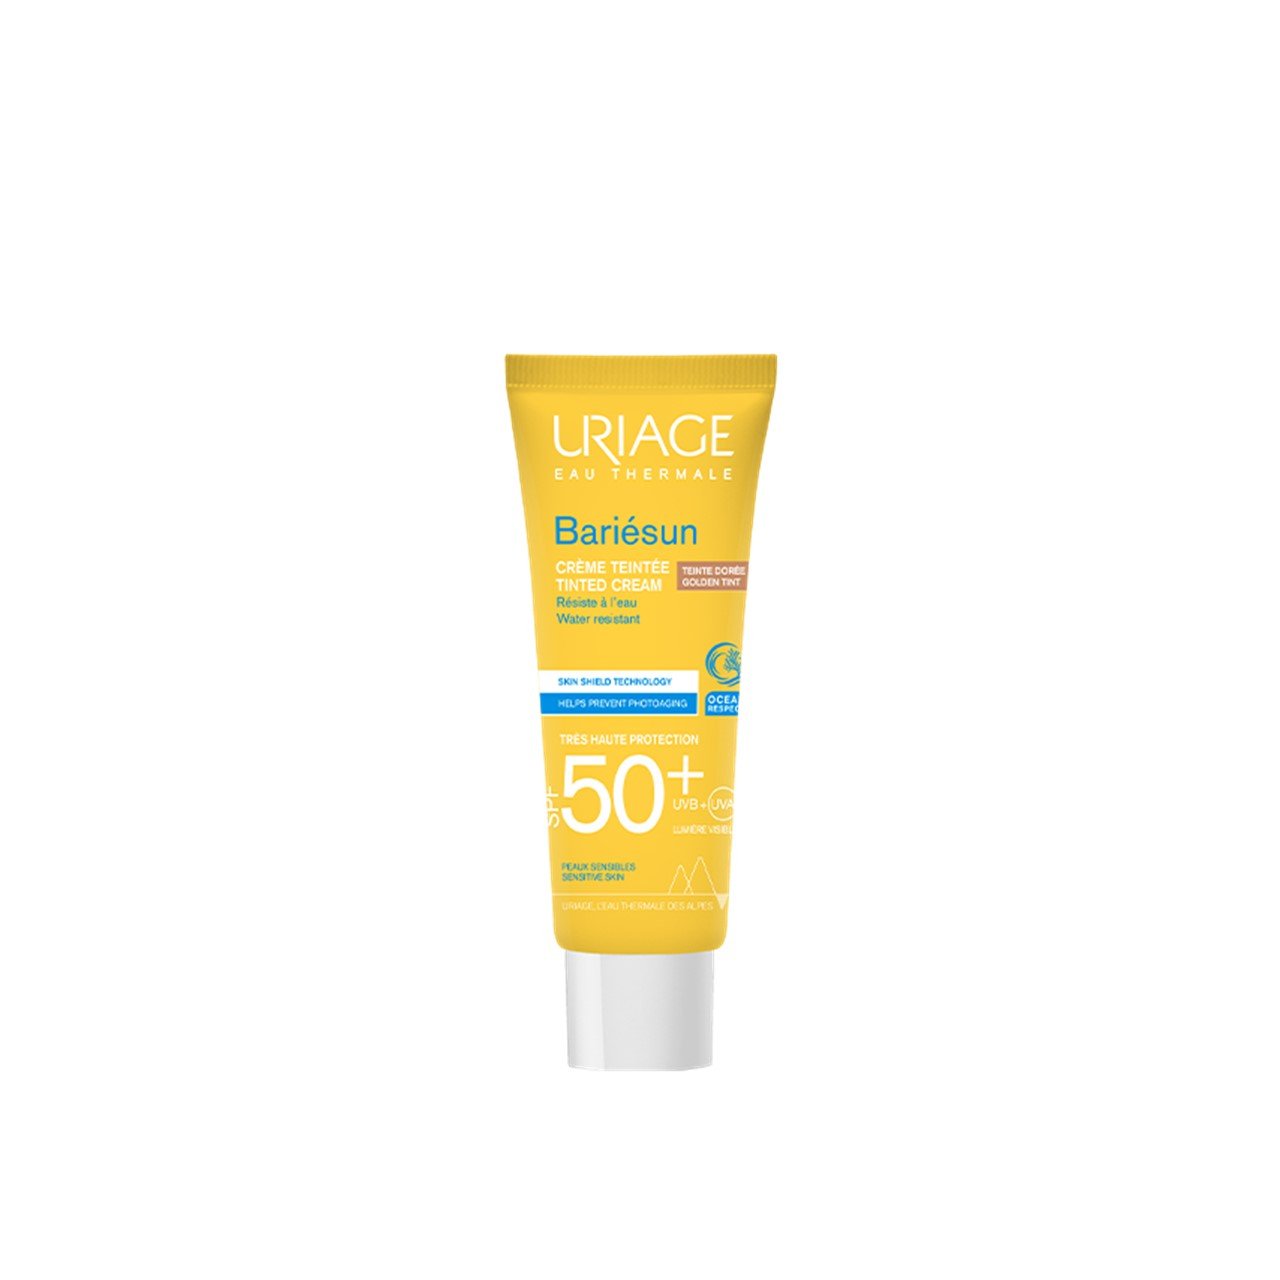 Uriage Bariésun Tinted Cream SPF50+ Golden Tint 50ml (1.69fl oz)